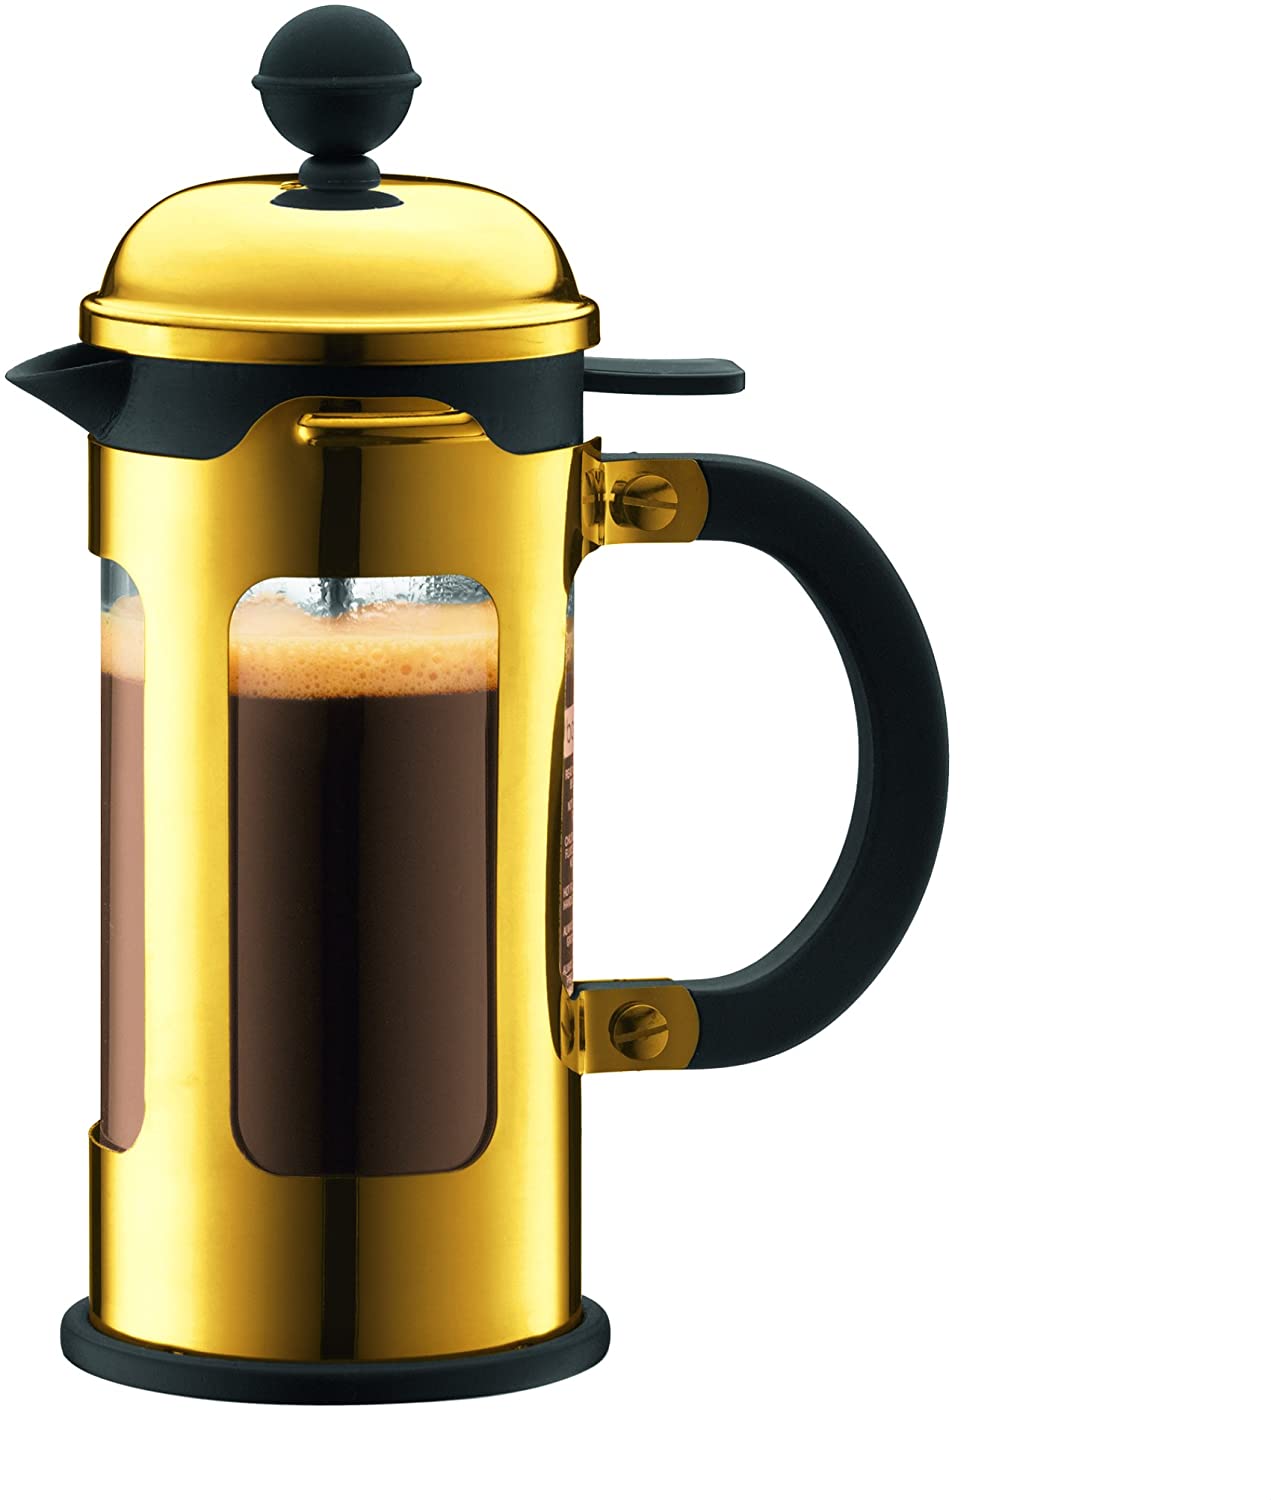 BODUM 0.35 Litre/12 oz Borosilicate Glass Chambord 3-Cup Coffee Maker, Gold